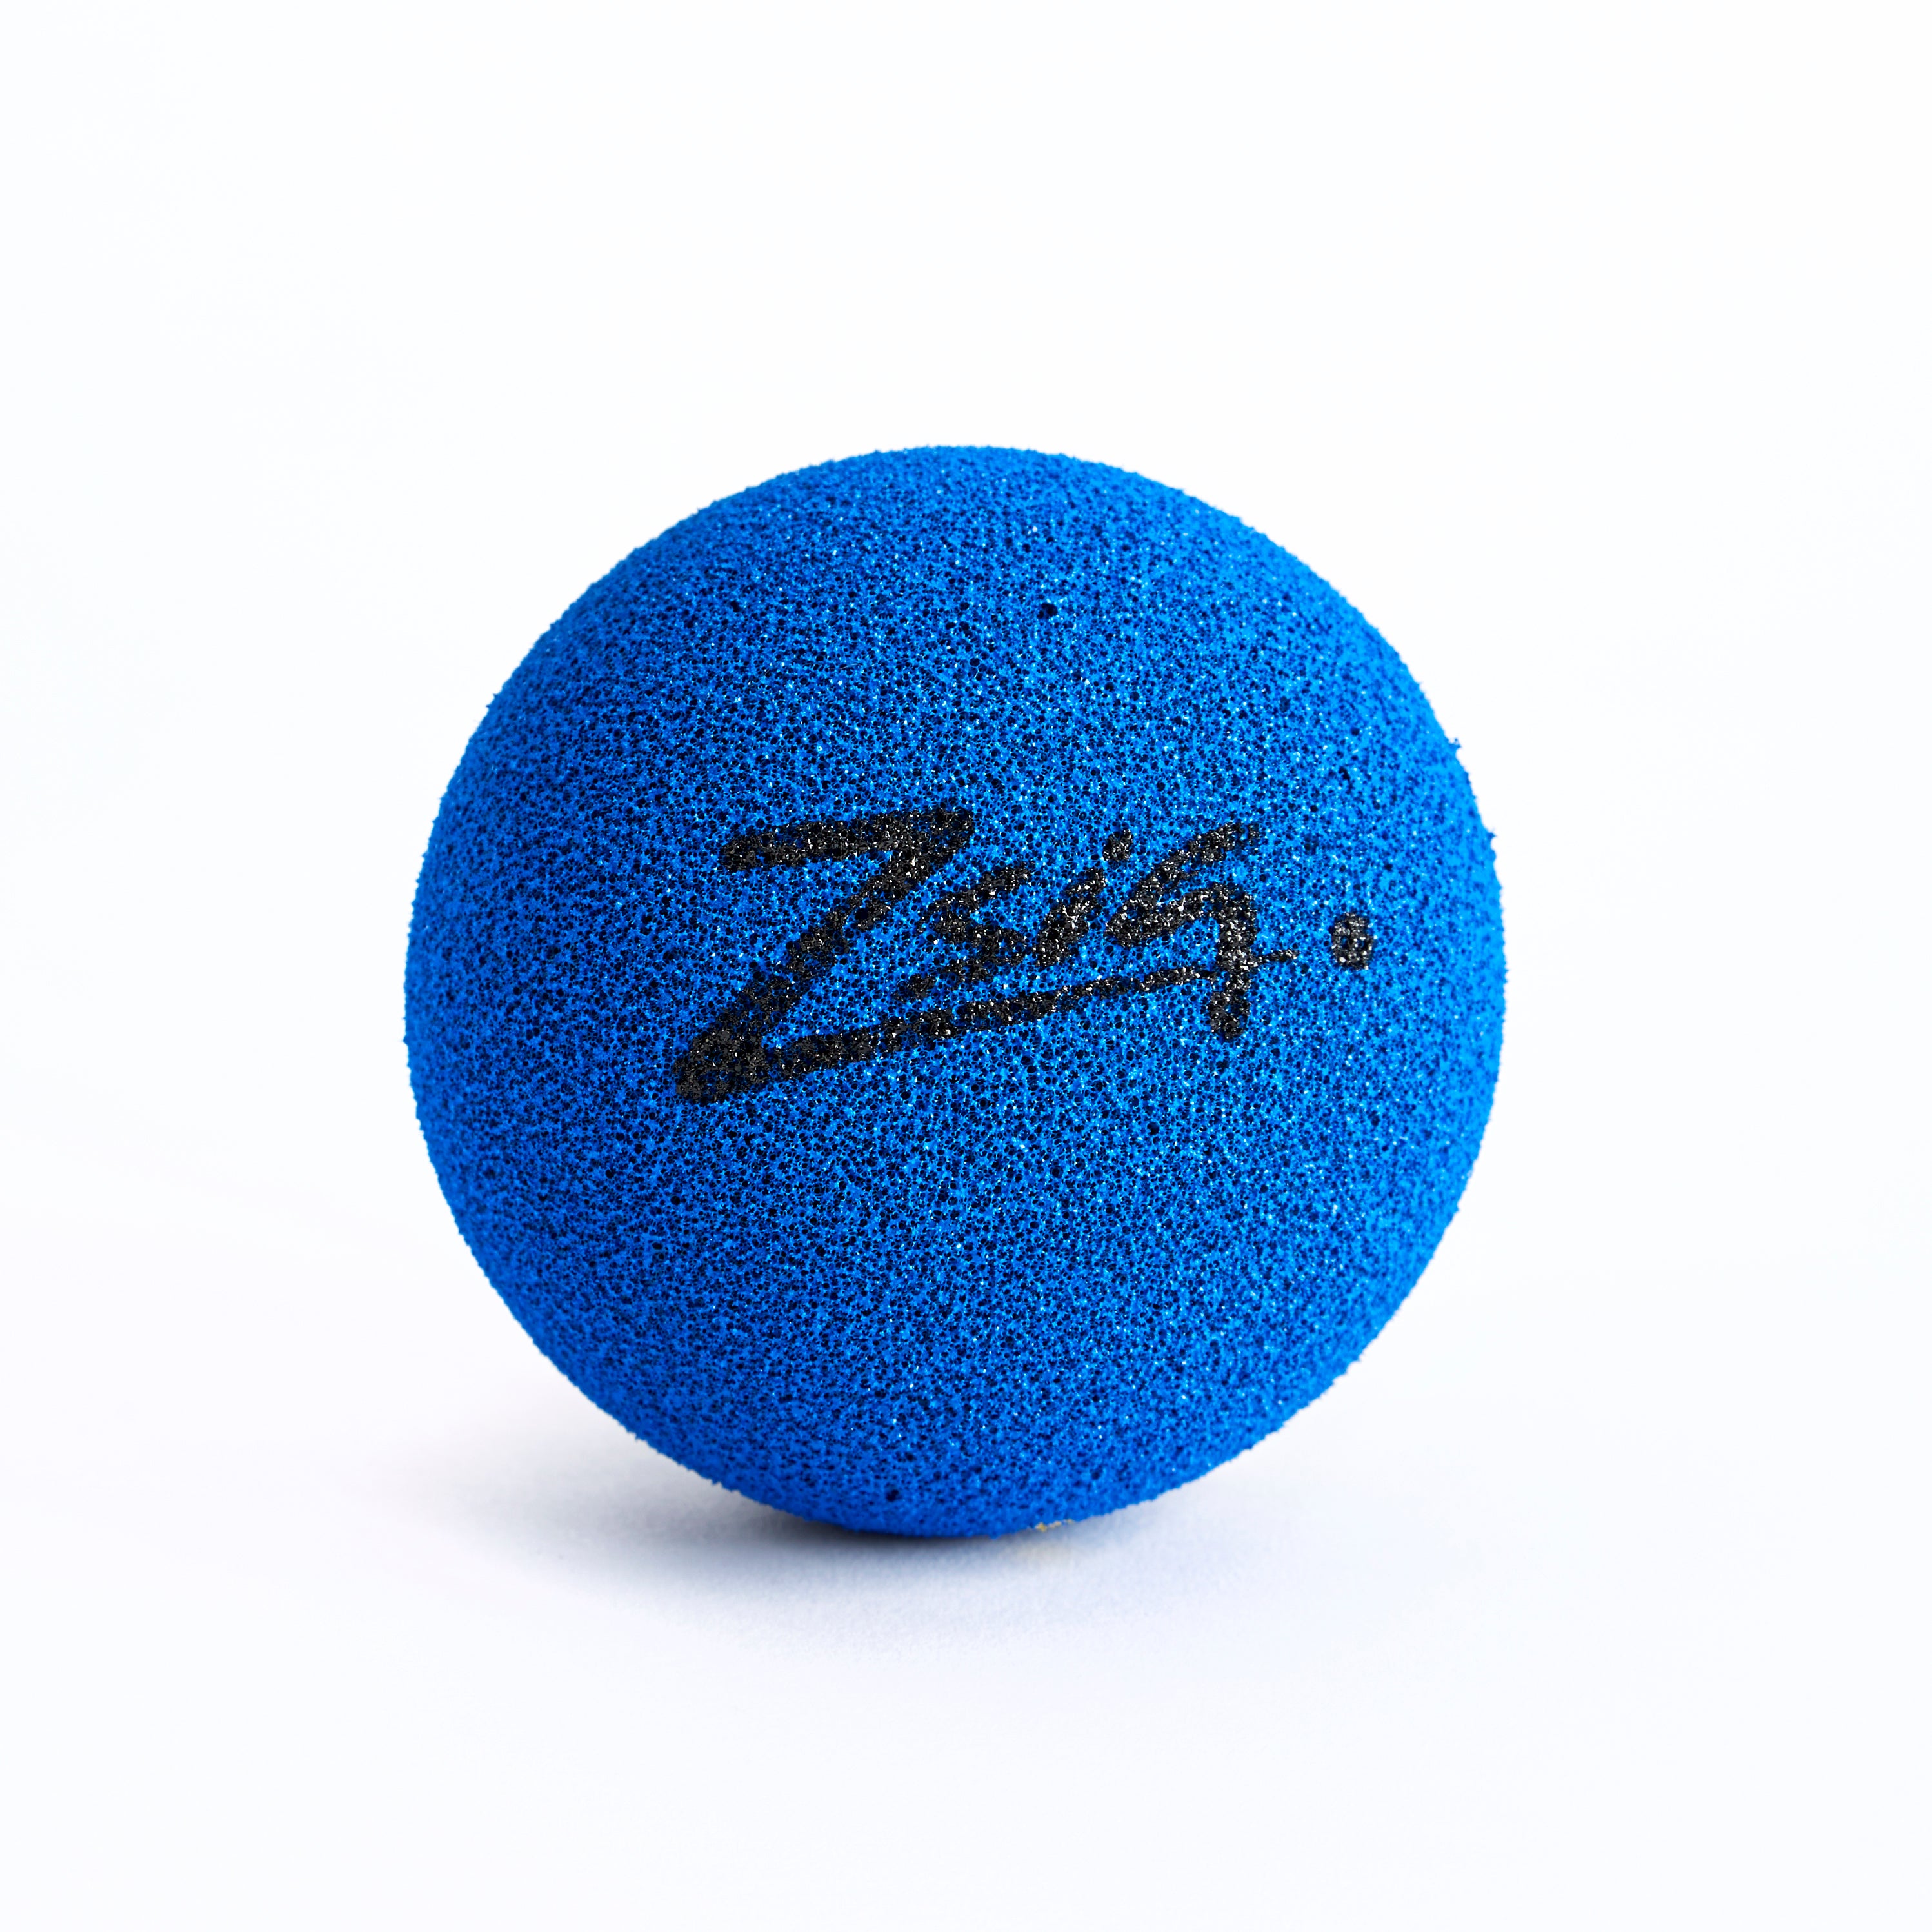 Zsig MP9 Tough Guy sponge ball in blue